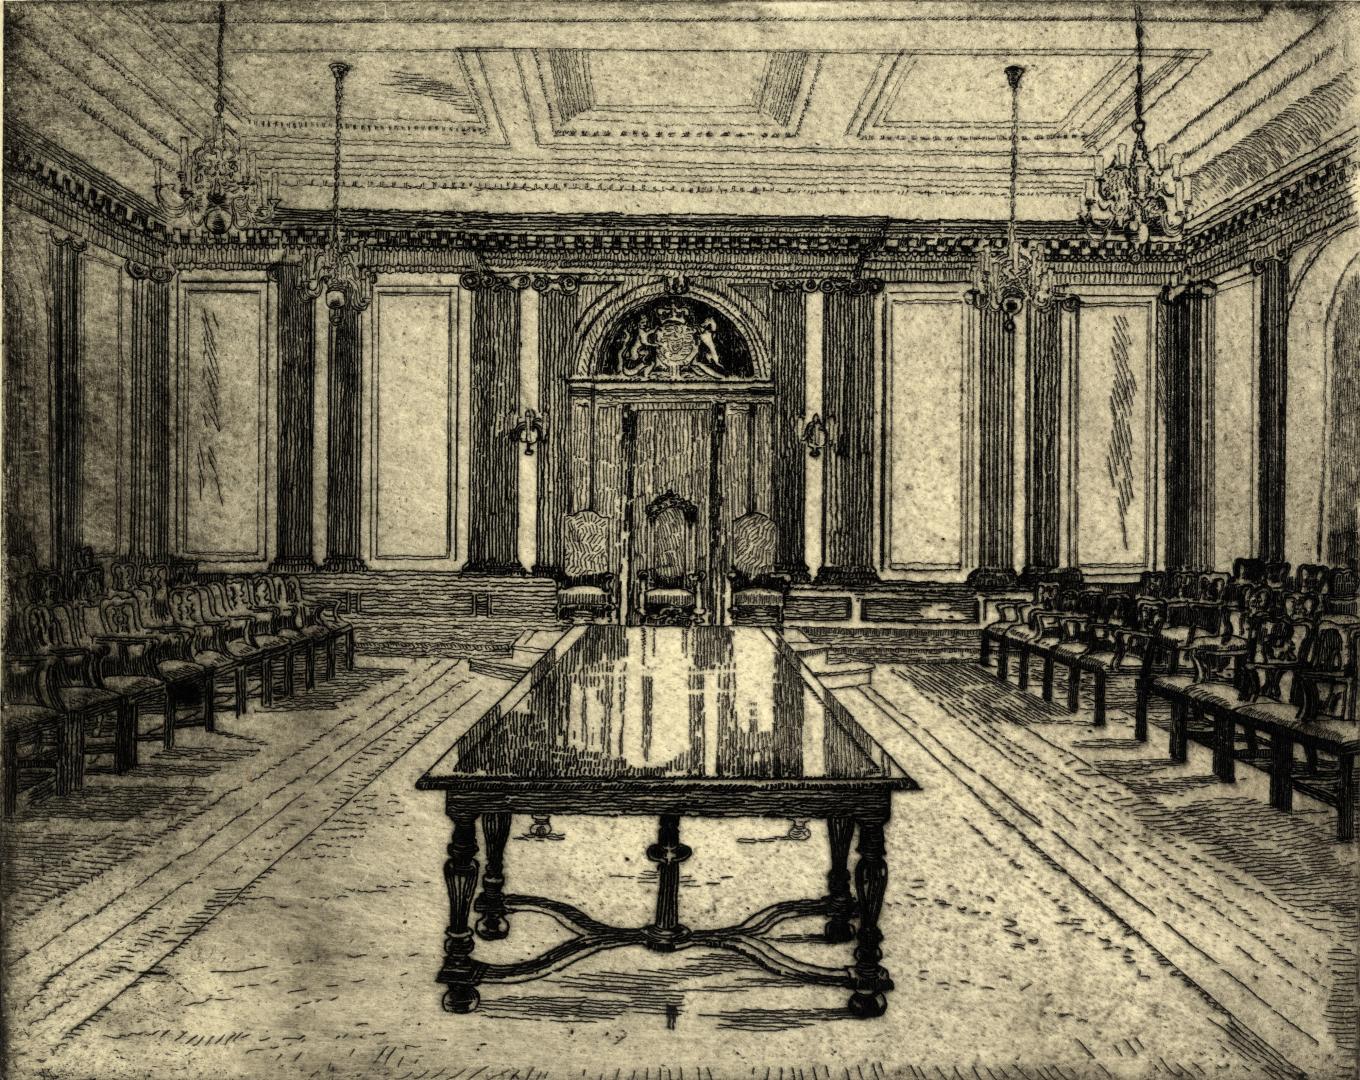 Simcoe Hall, Interior, council chamber